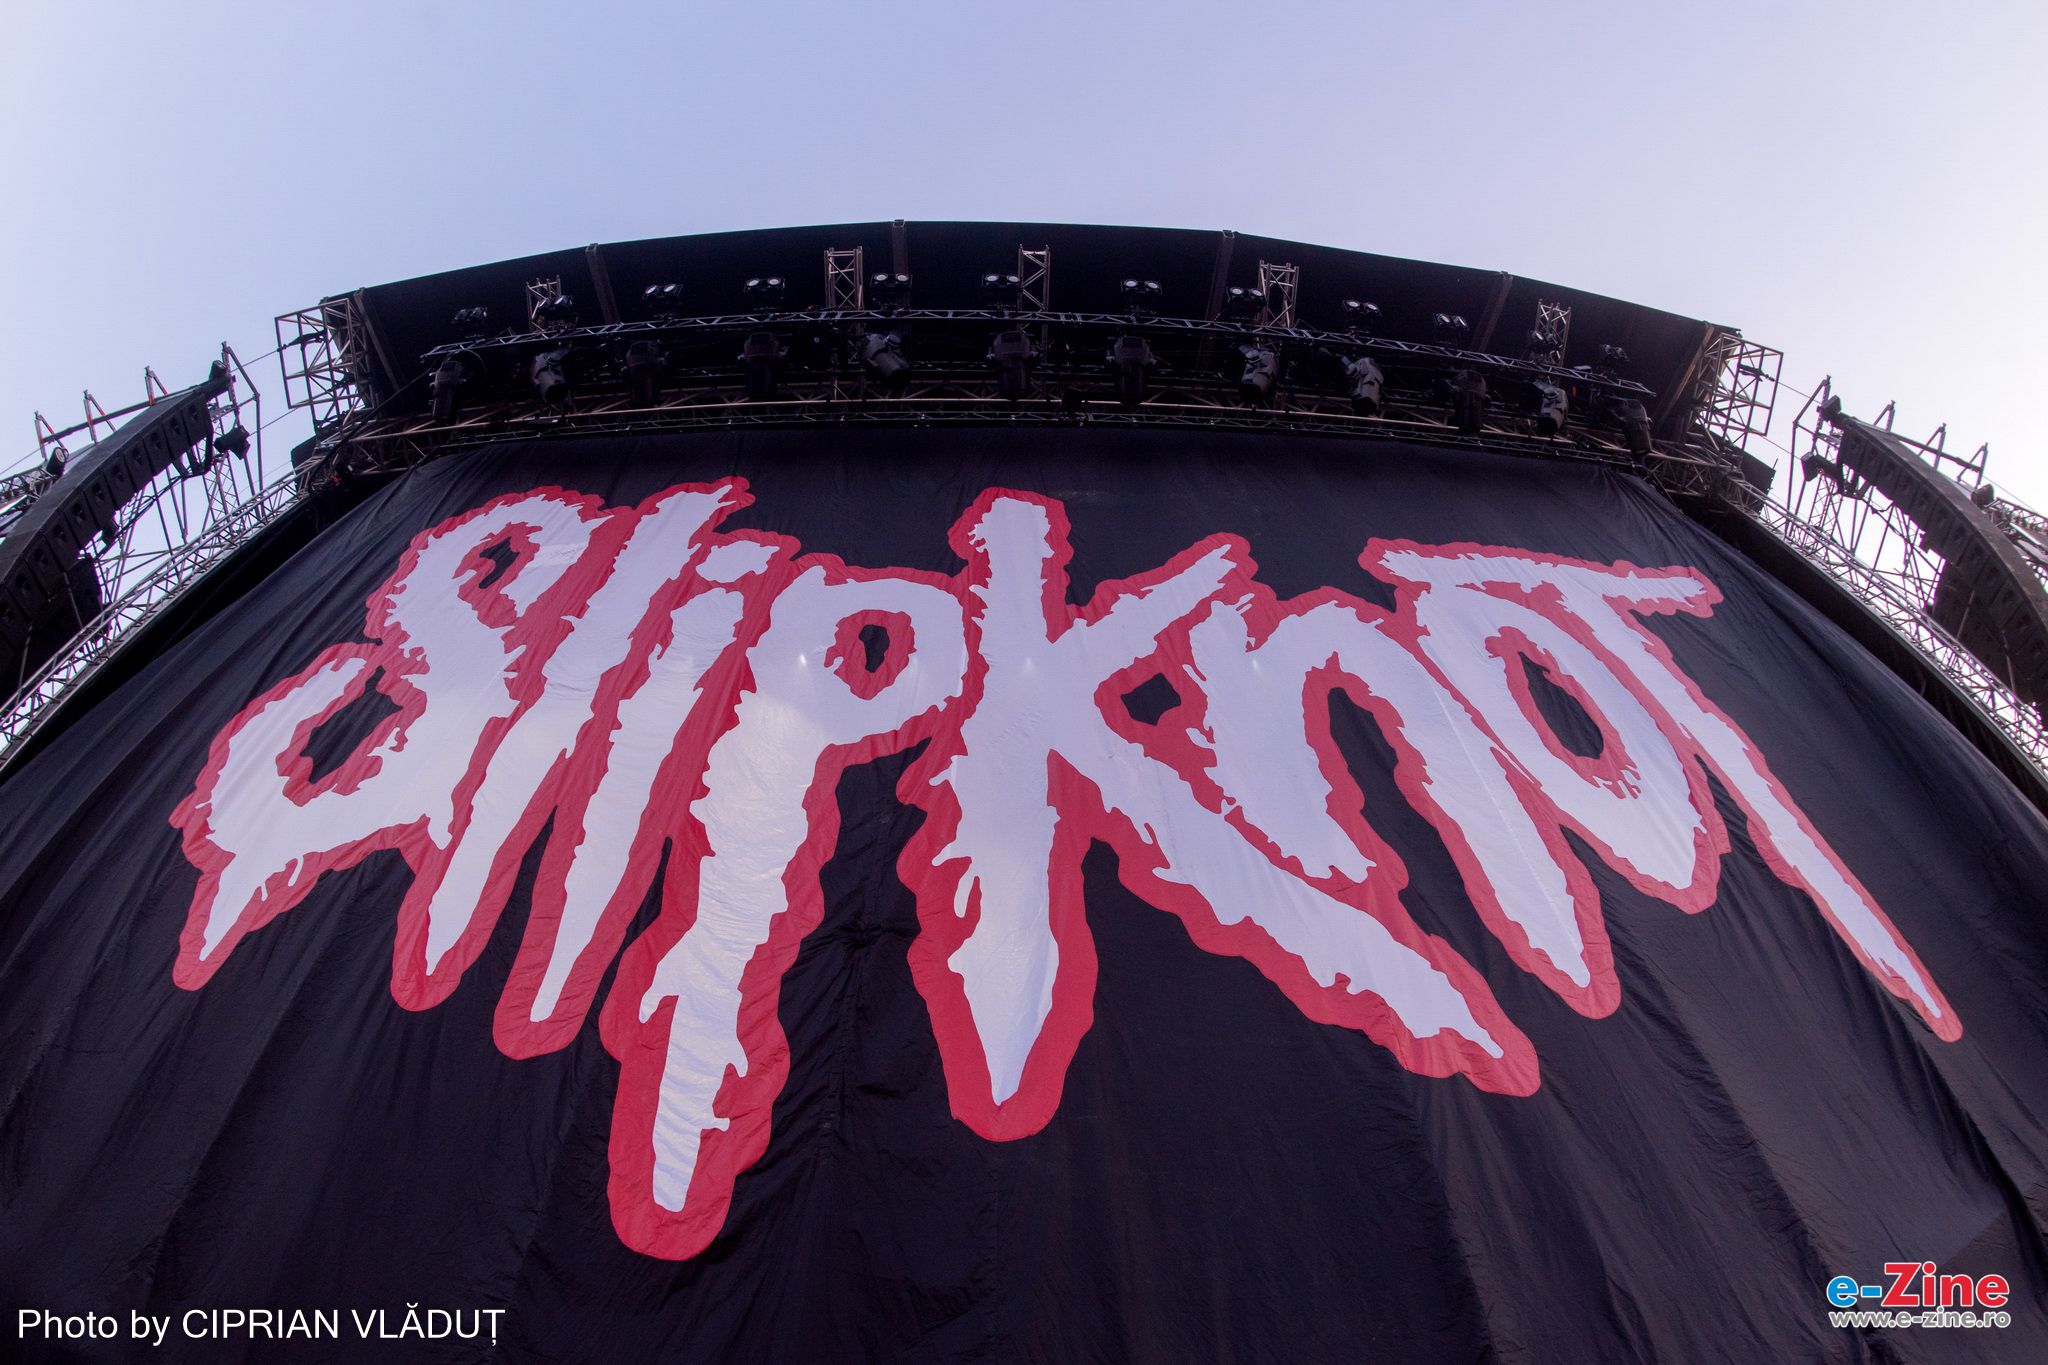 Fotografii de la concertul Slipknot din cadrul Metalhead Meeting de la Romexpo